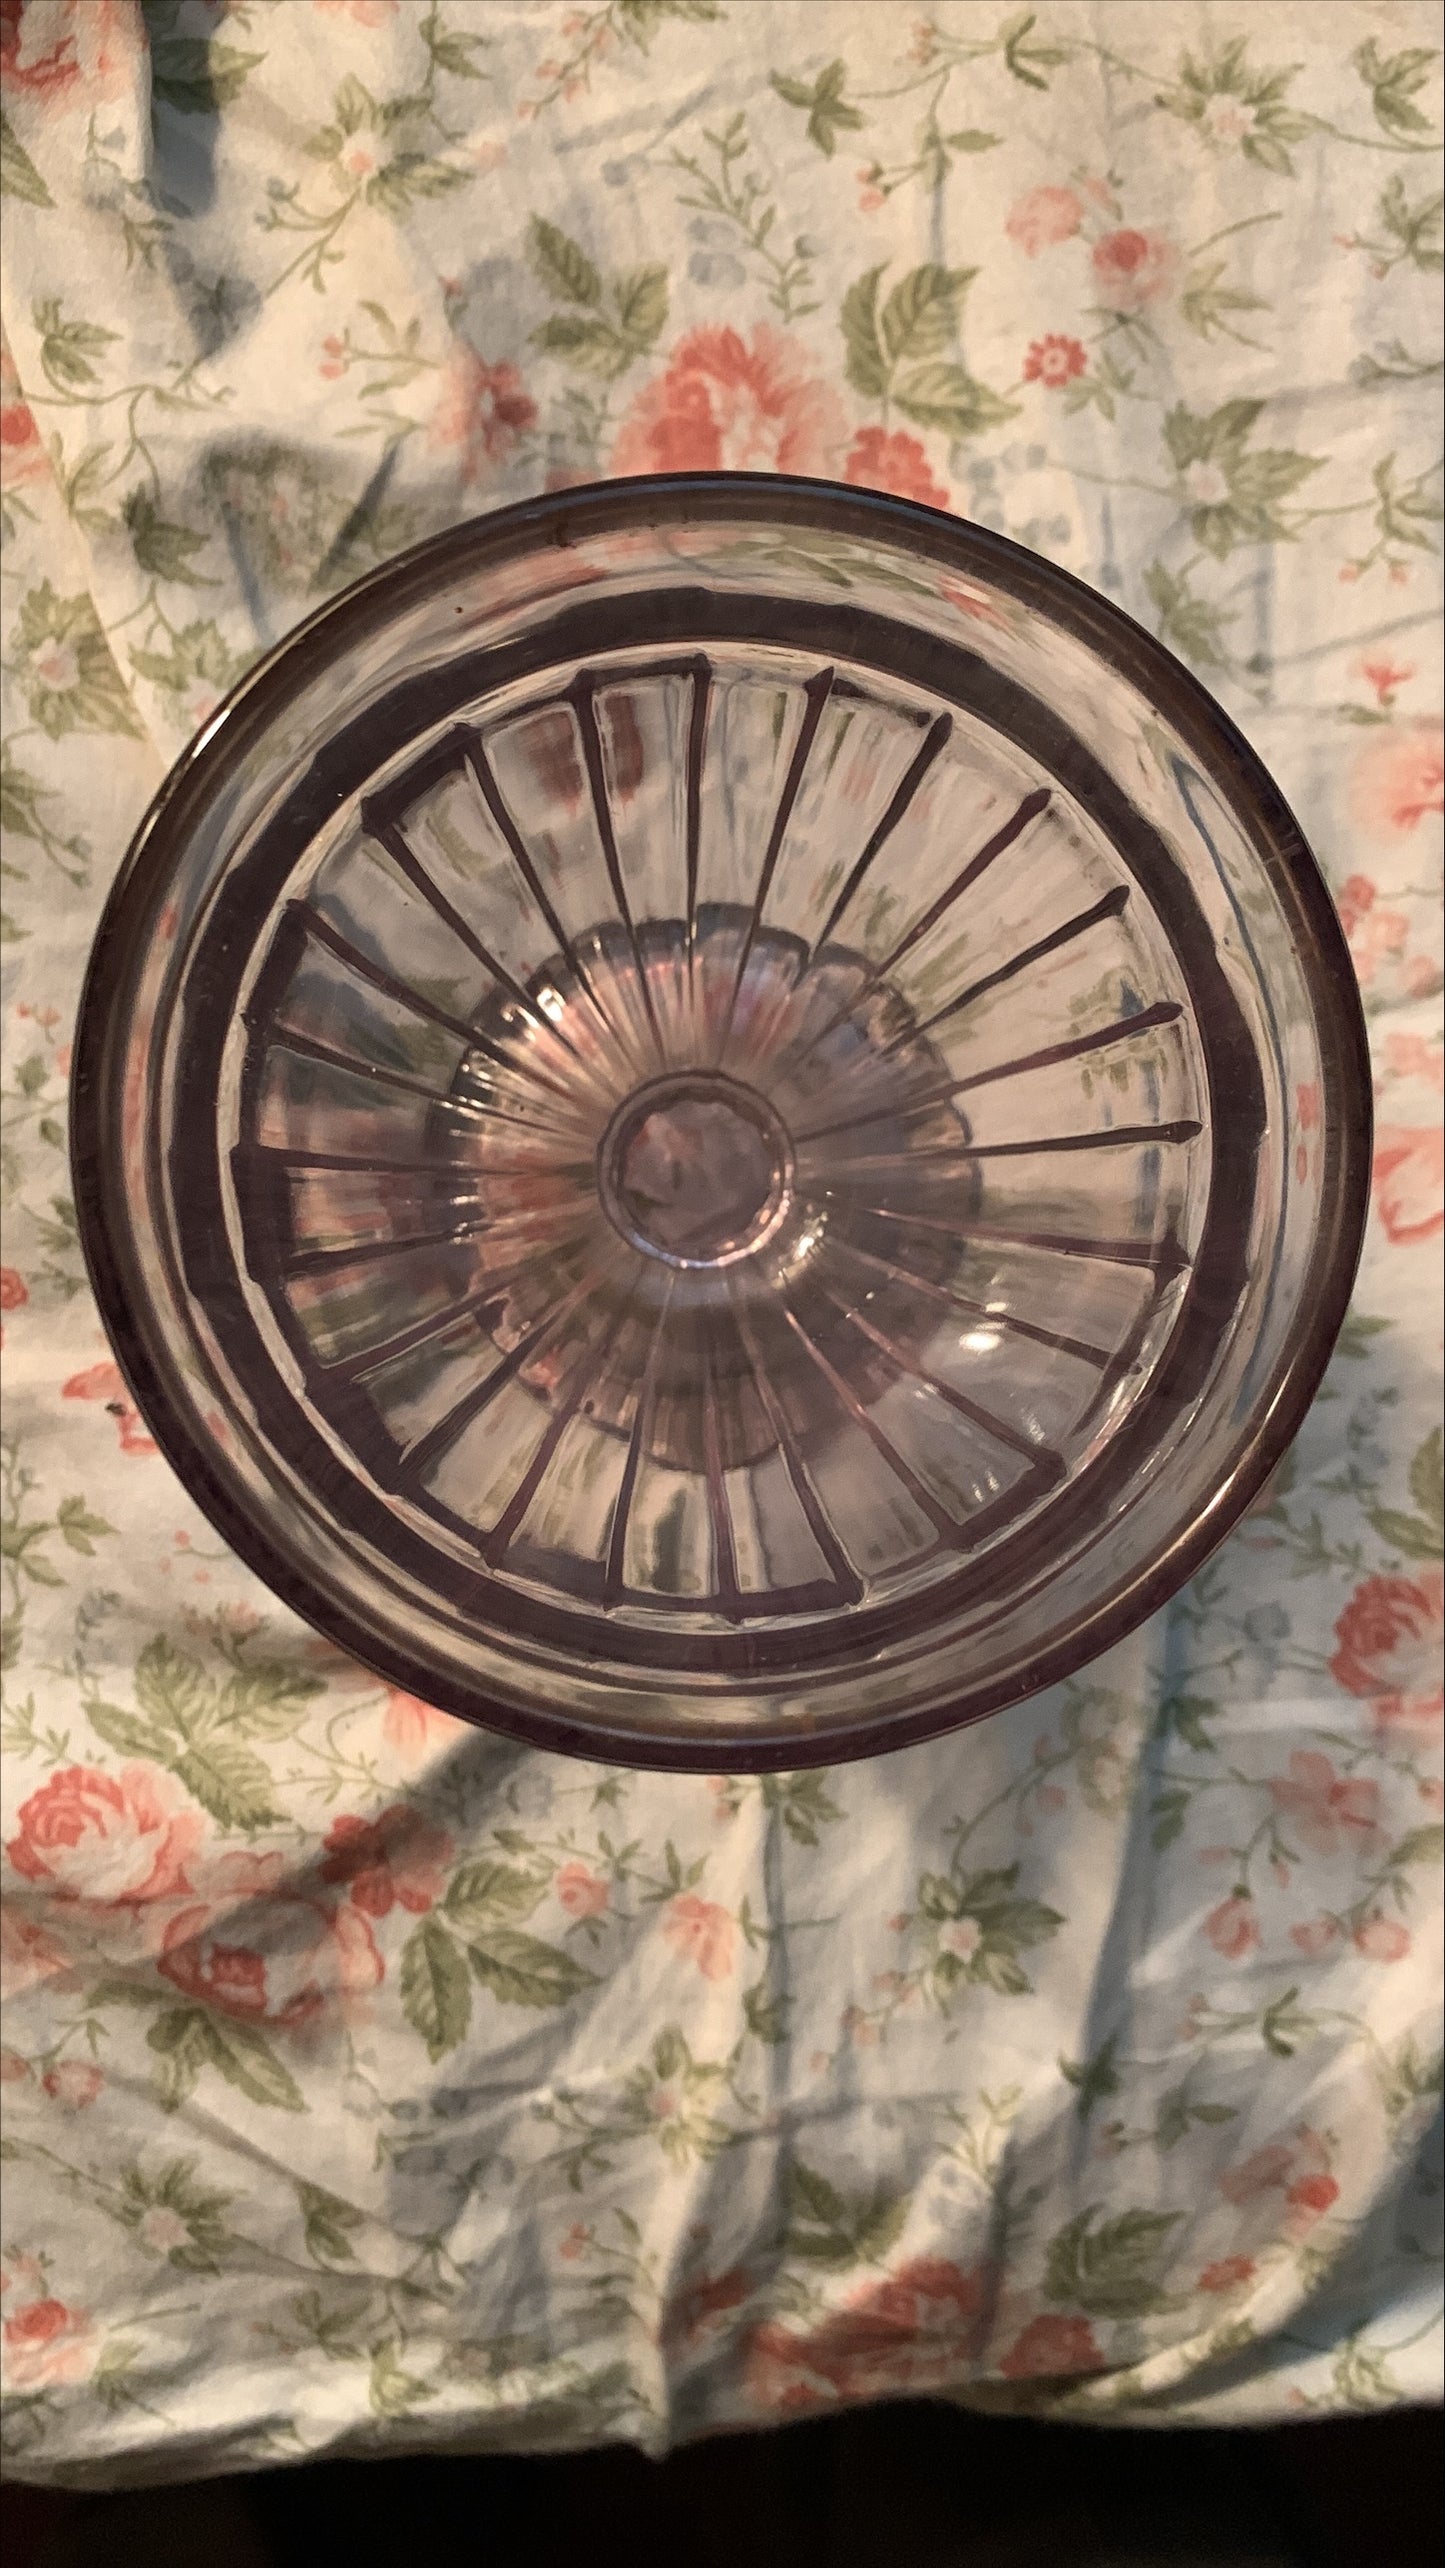 Amethyst Glassware